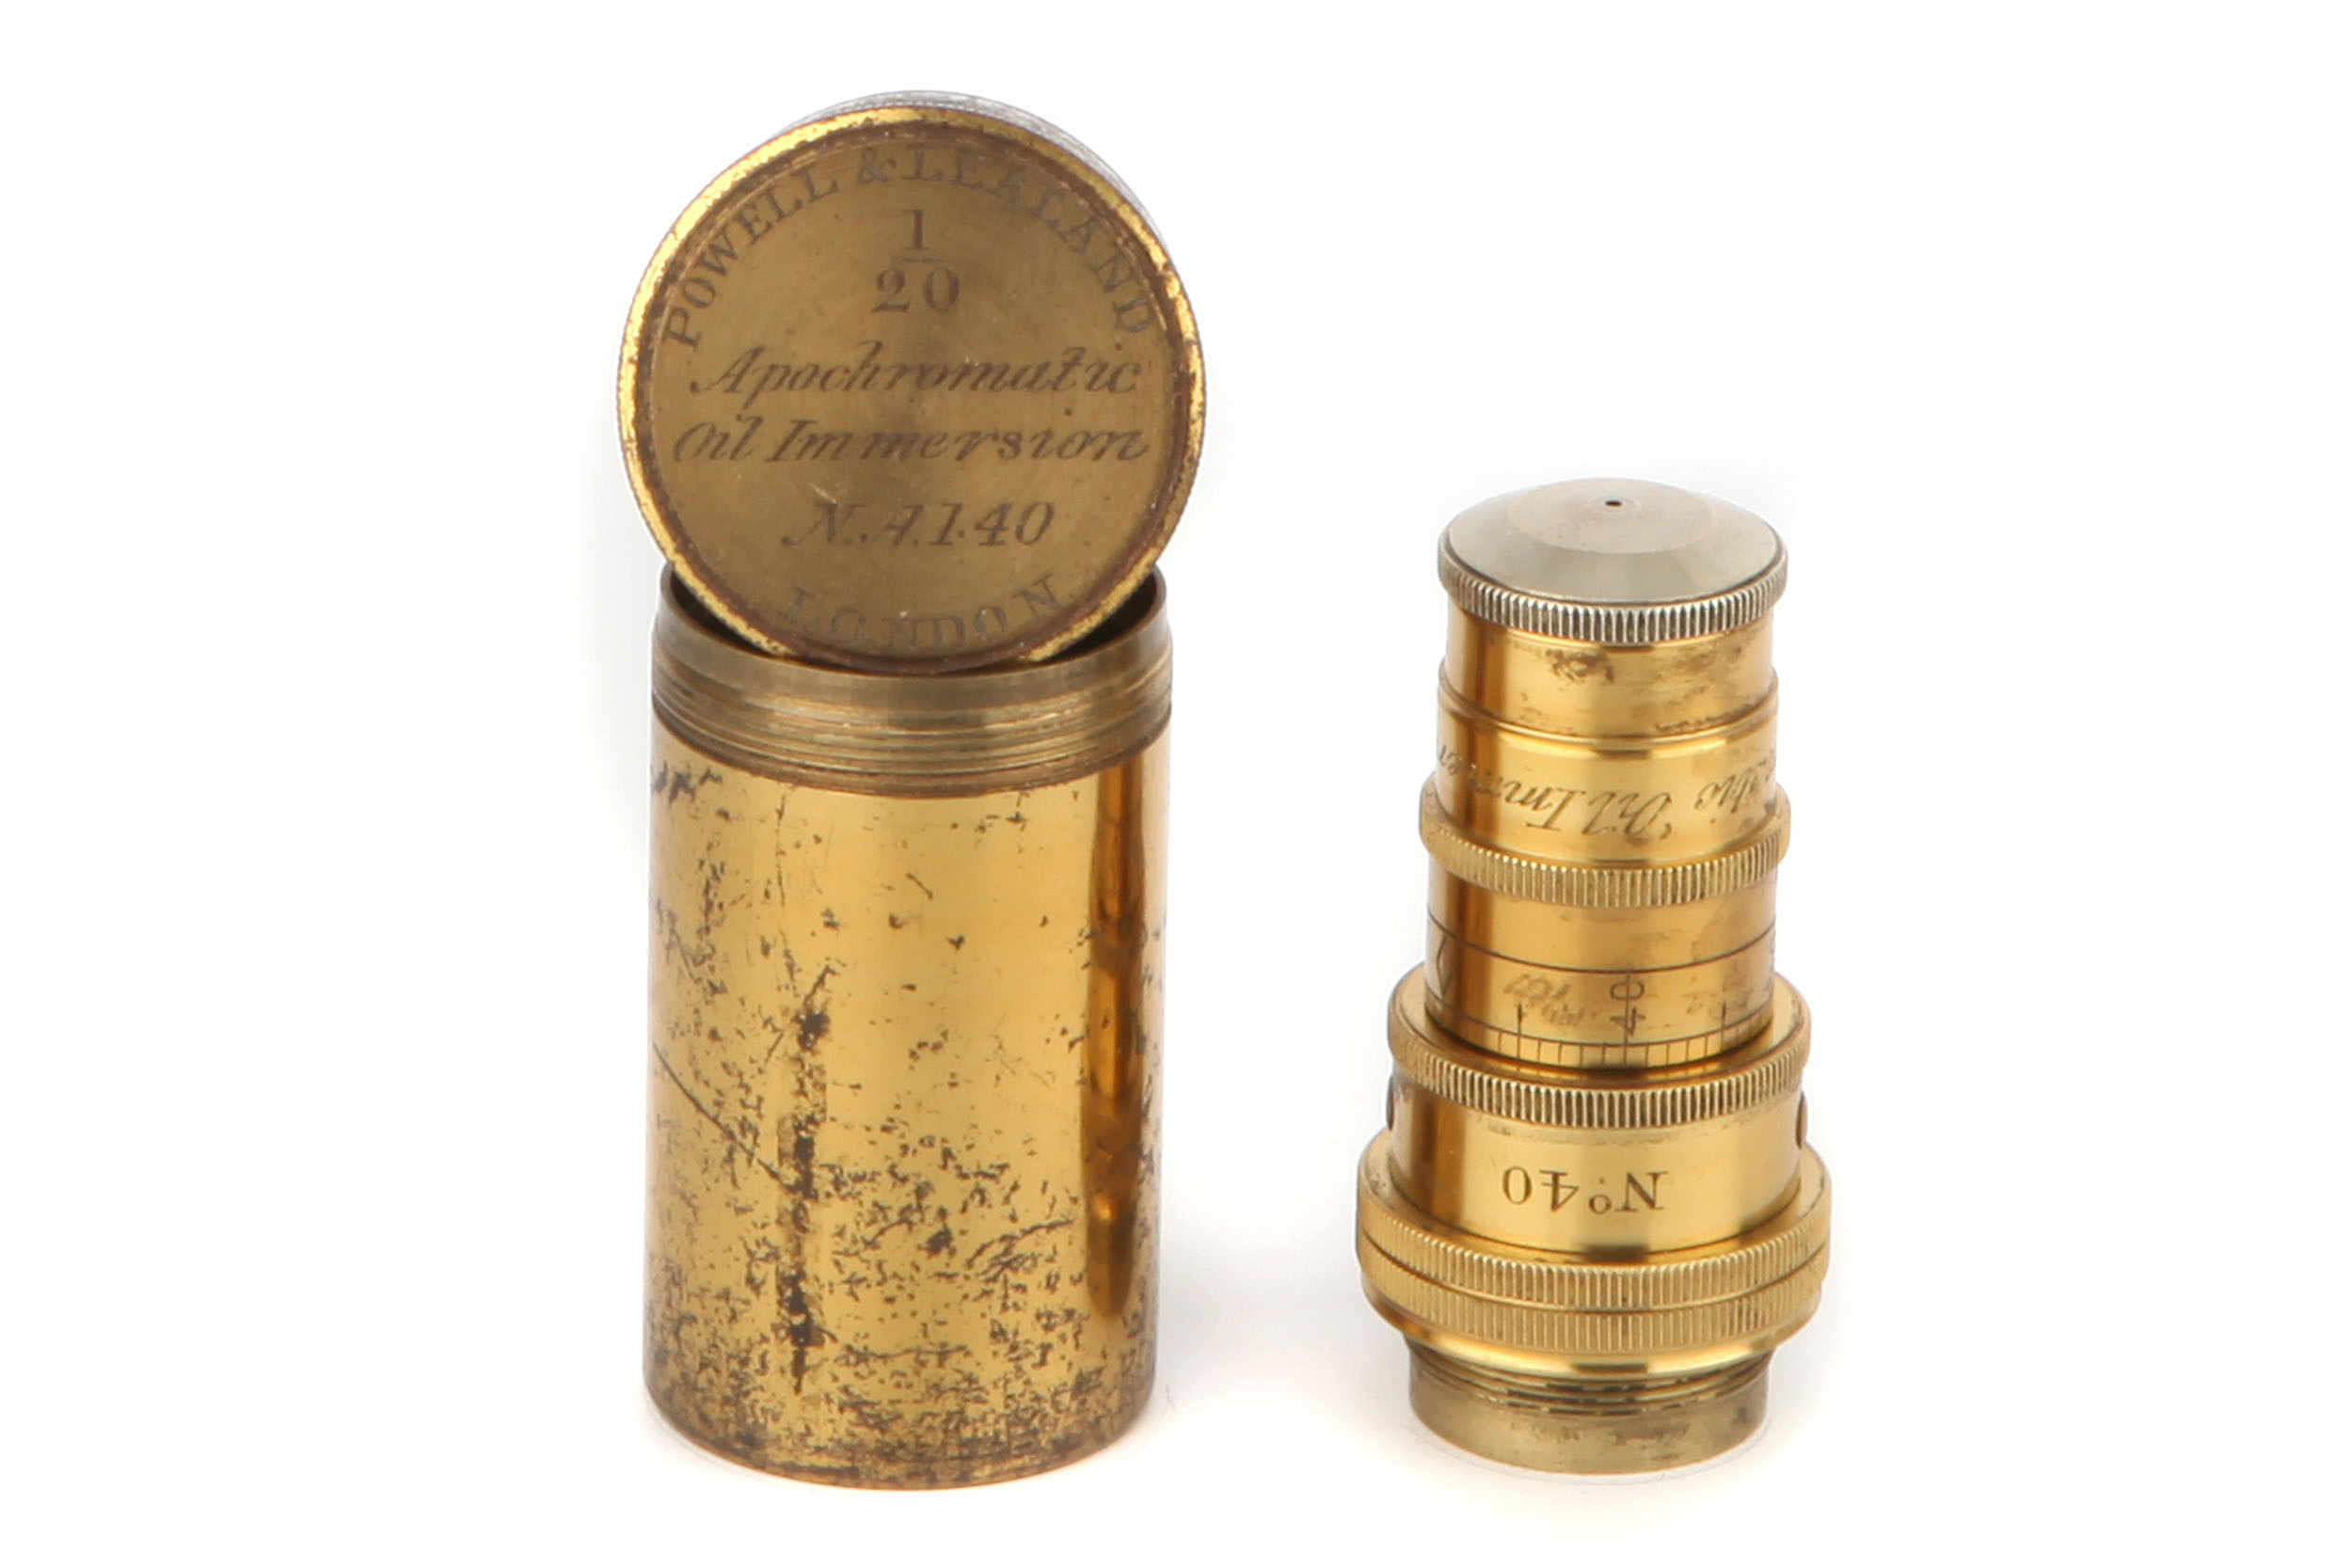 A Powell & Lealand Microscope 1/20 inch Objective,